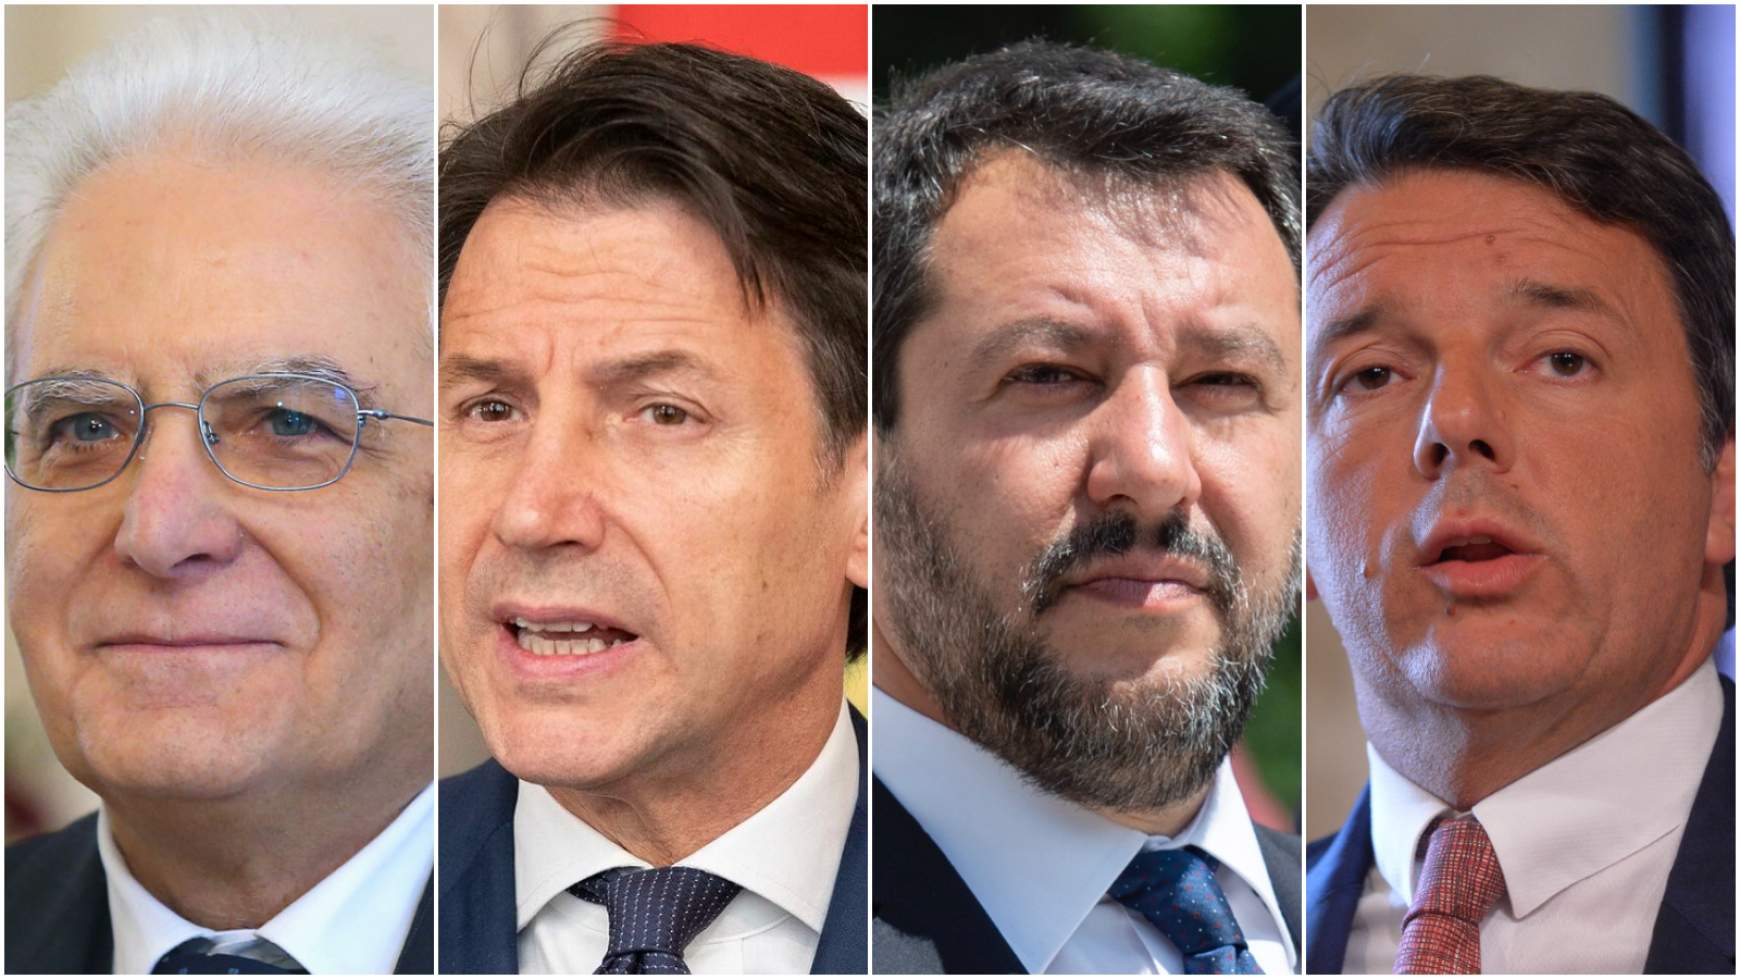 Sergio Mattarella, Giuseppe Conte, Matteo Salvini, Matteo Renzi